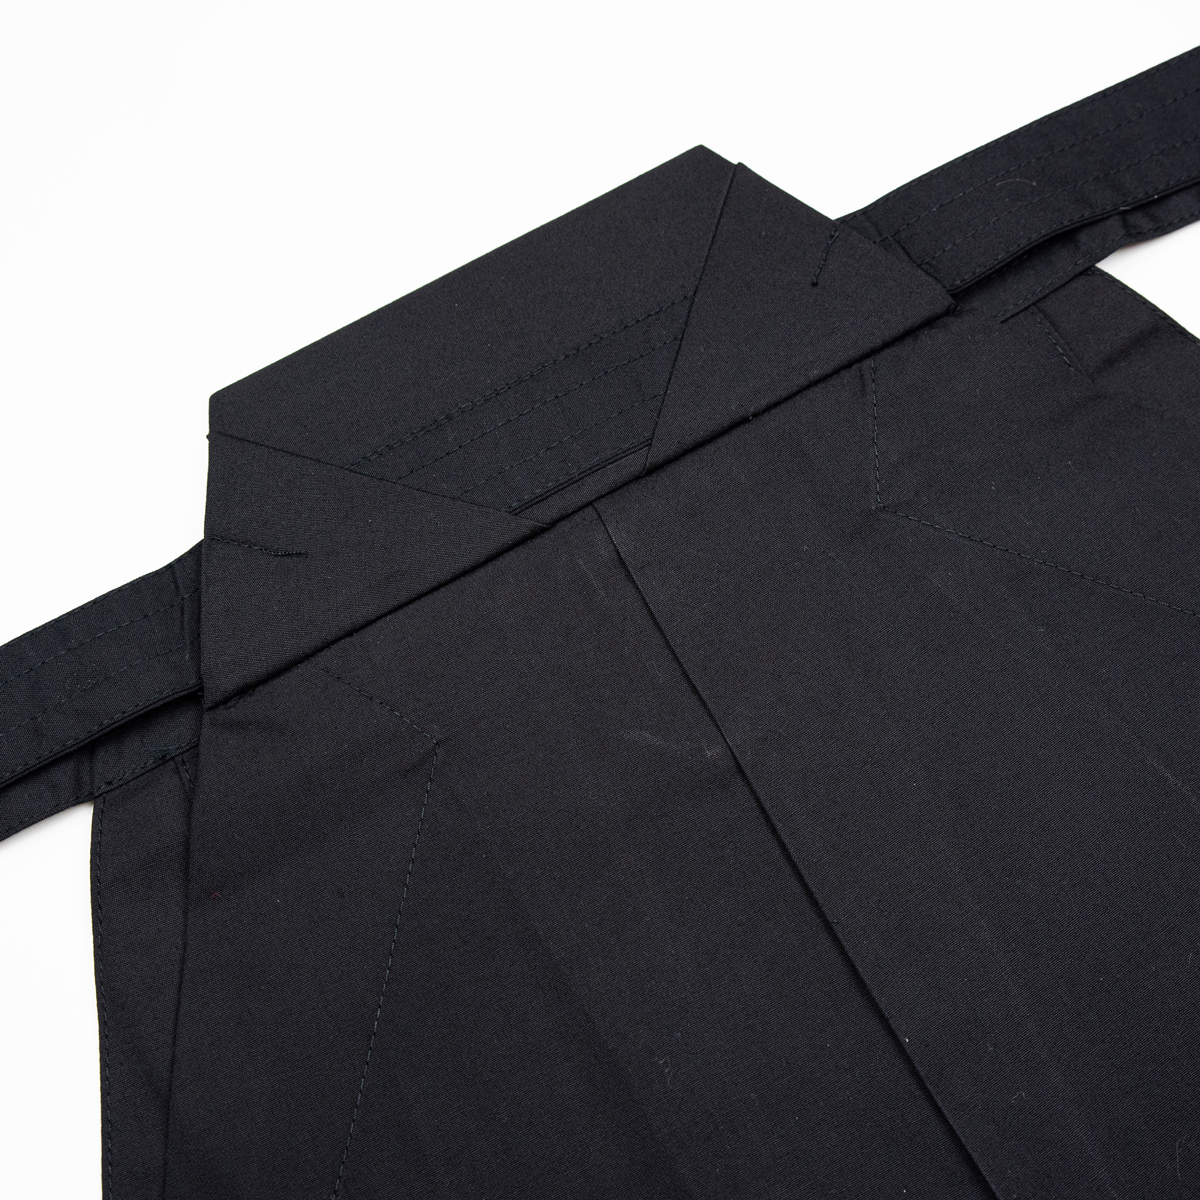 Miyabi Black Tetron Hakama for Iaido Practice